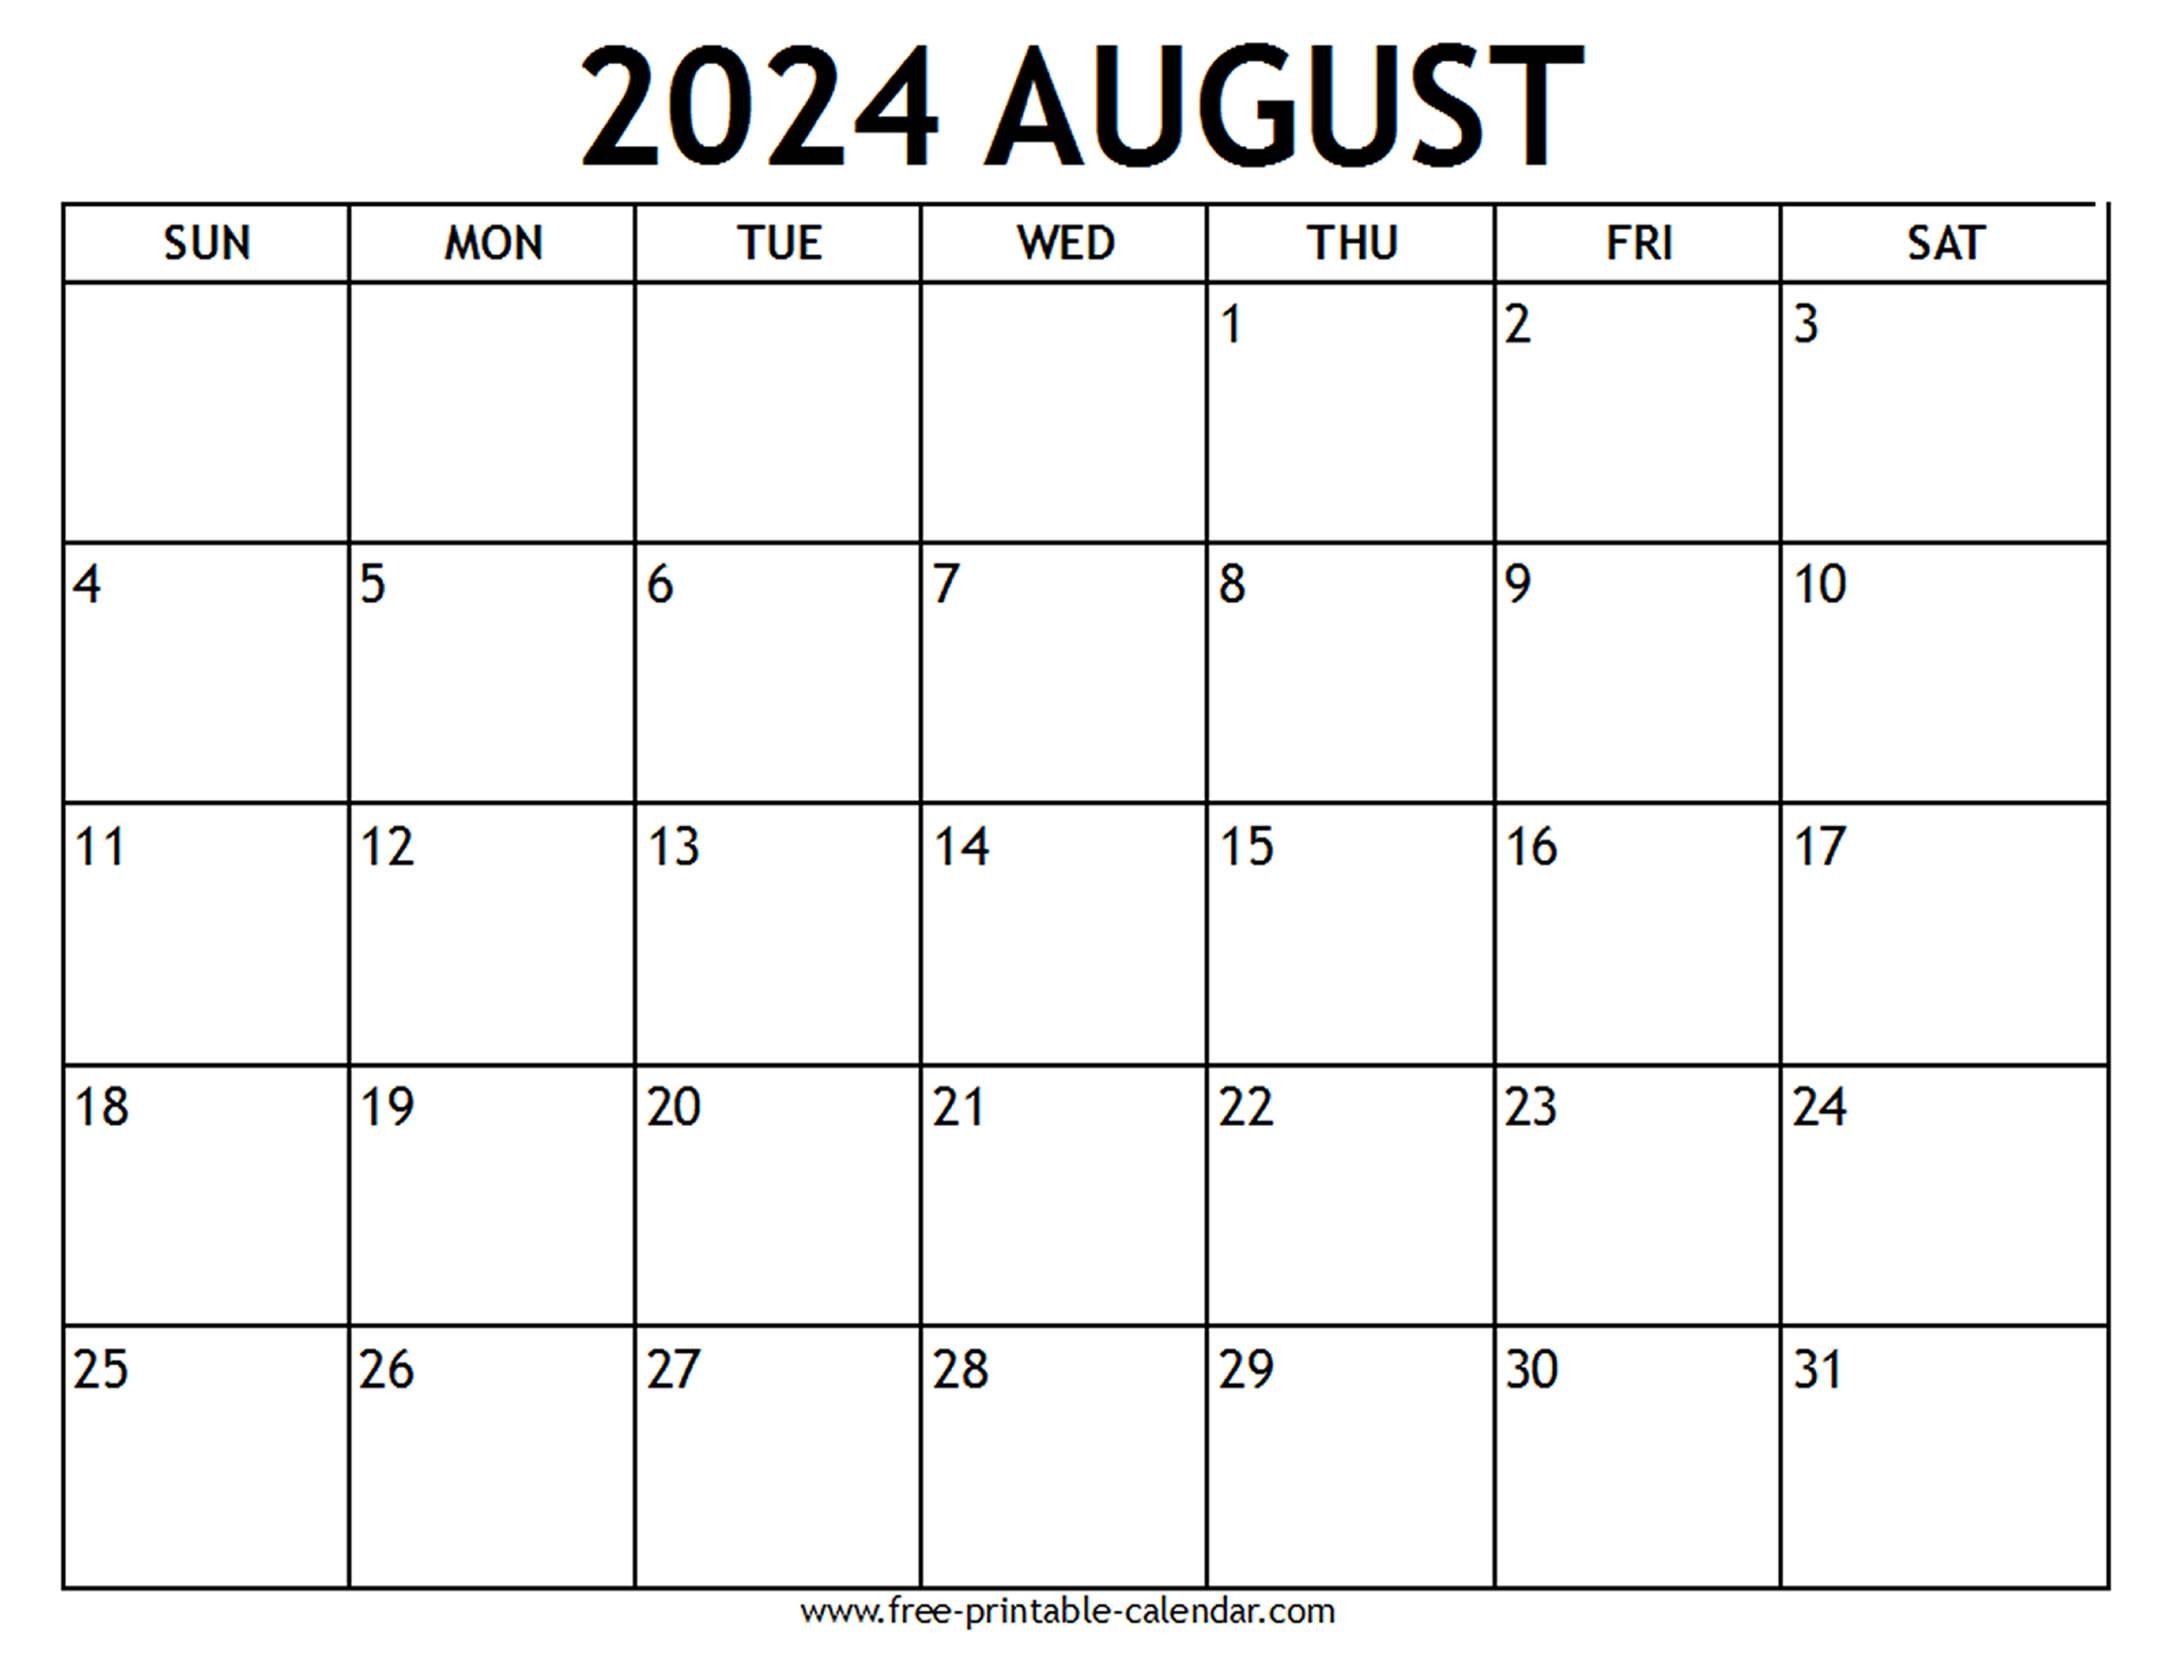 August 2024 Calendar Us Holidays - Free-Printable-Calendar within Free Printable Calendar August 2024 Uk